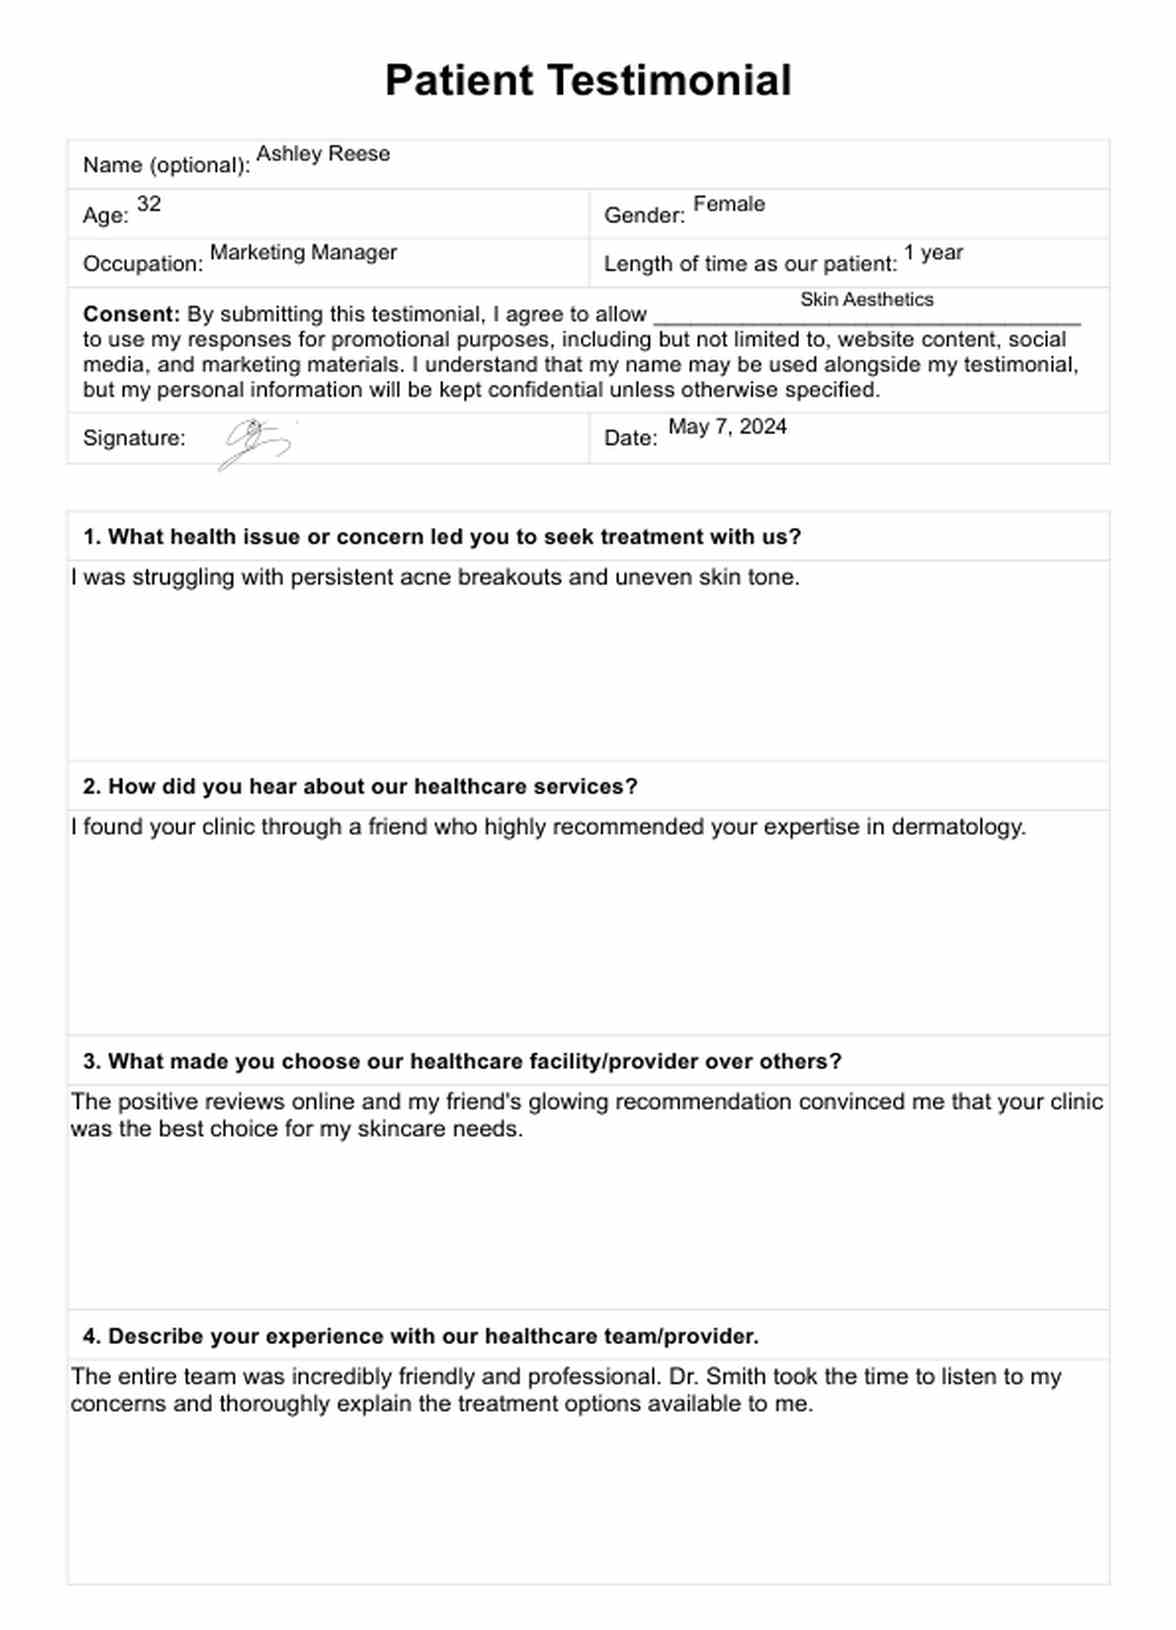 Patient Testimonial Template PDF Example